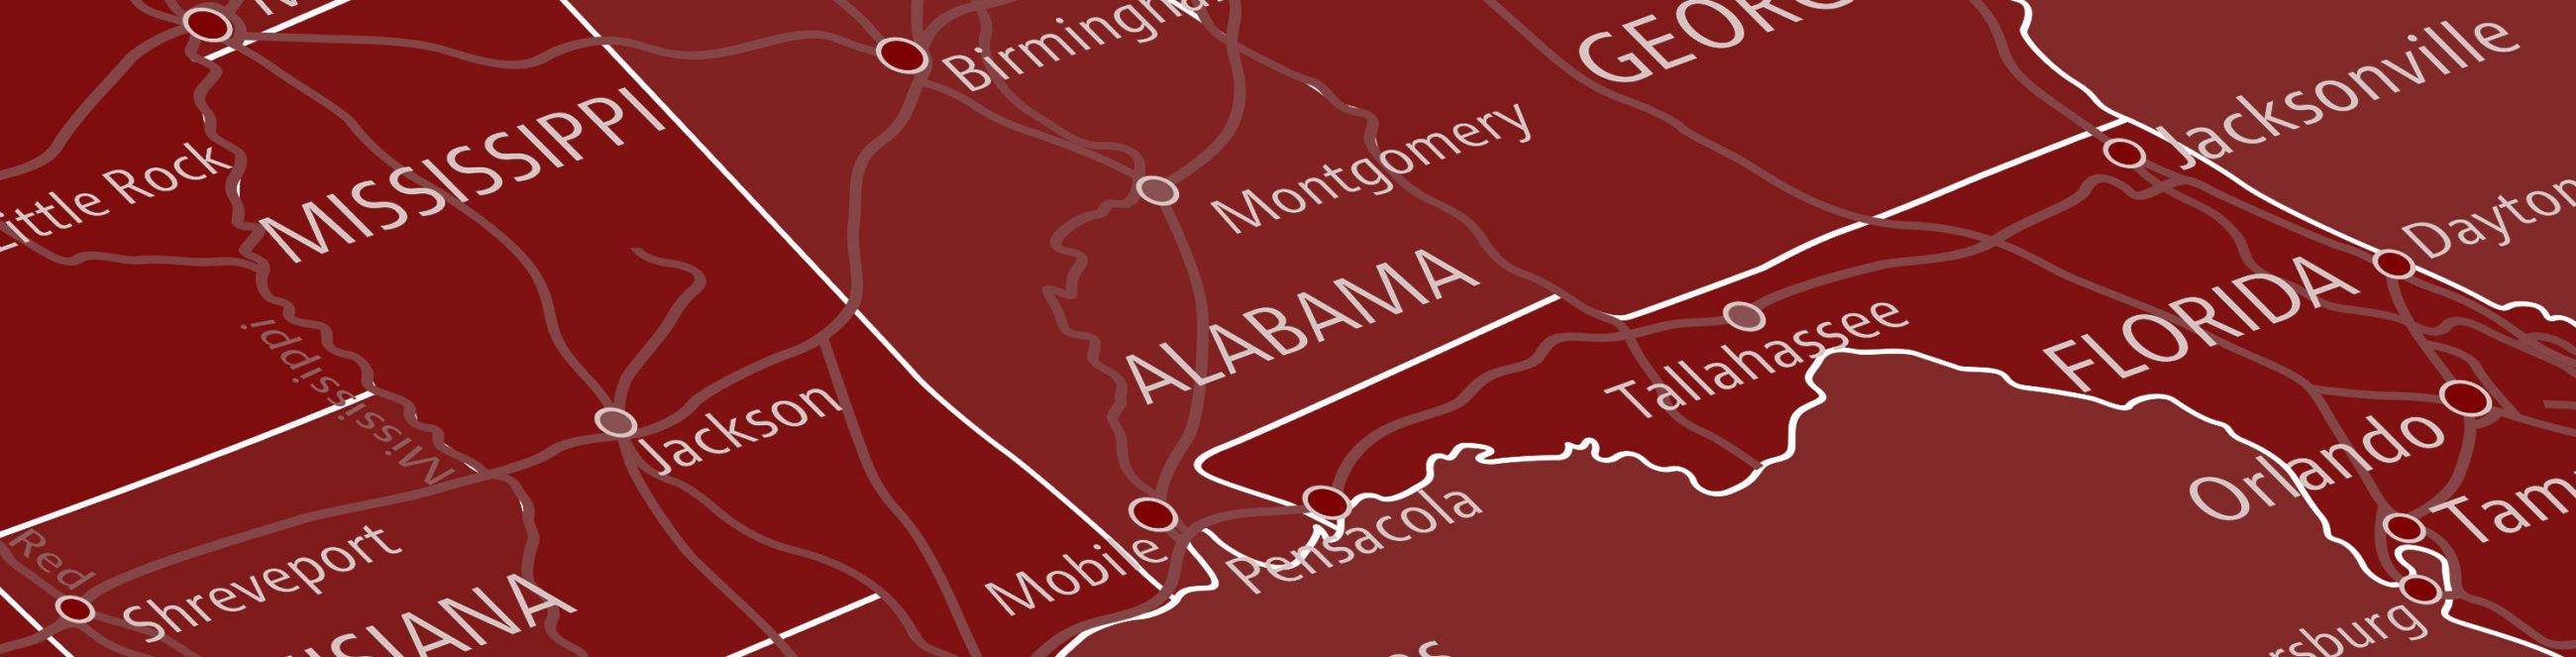 Delta 9 Alabama Facts & Is Delta 9 Legal in Alabama?